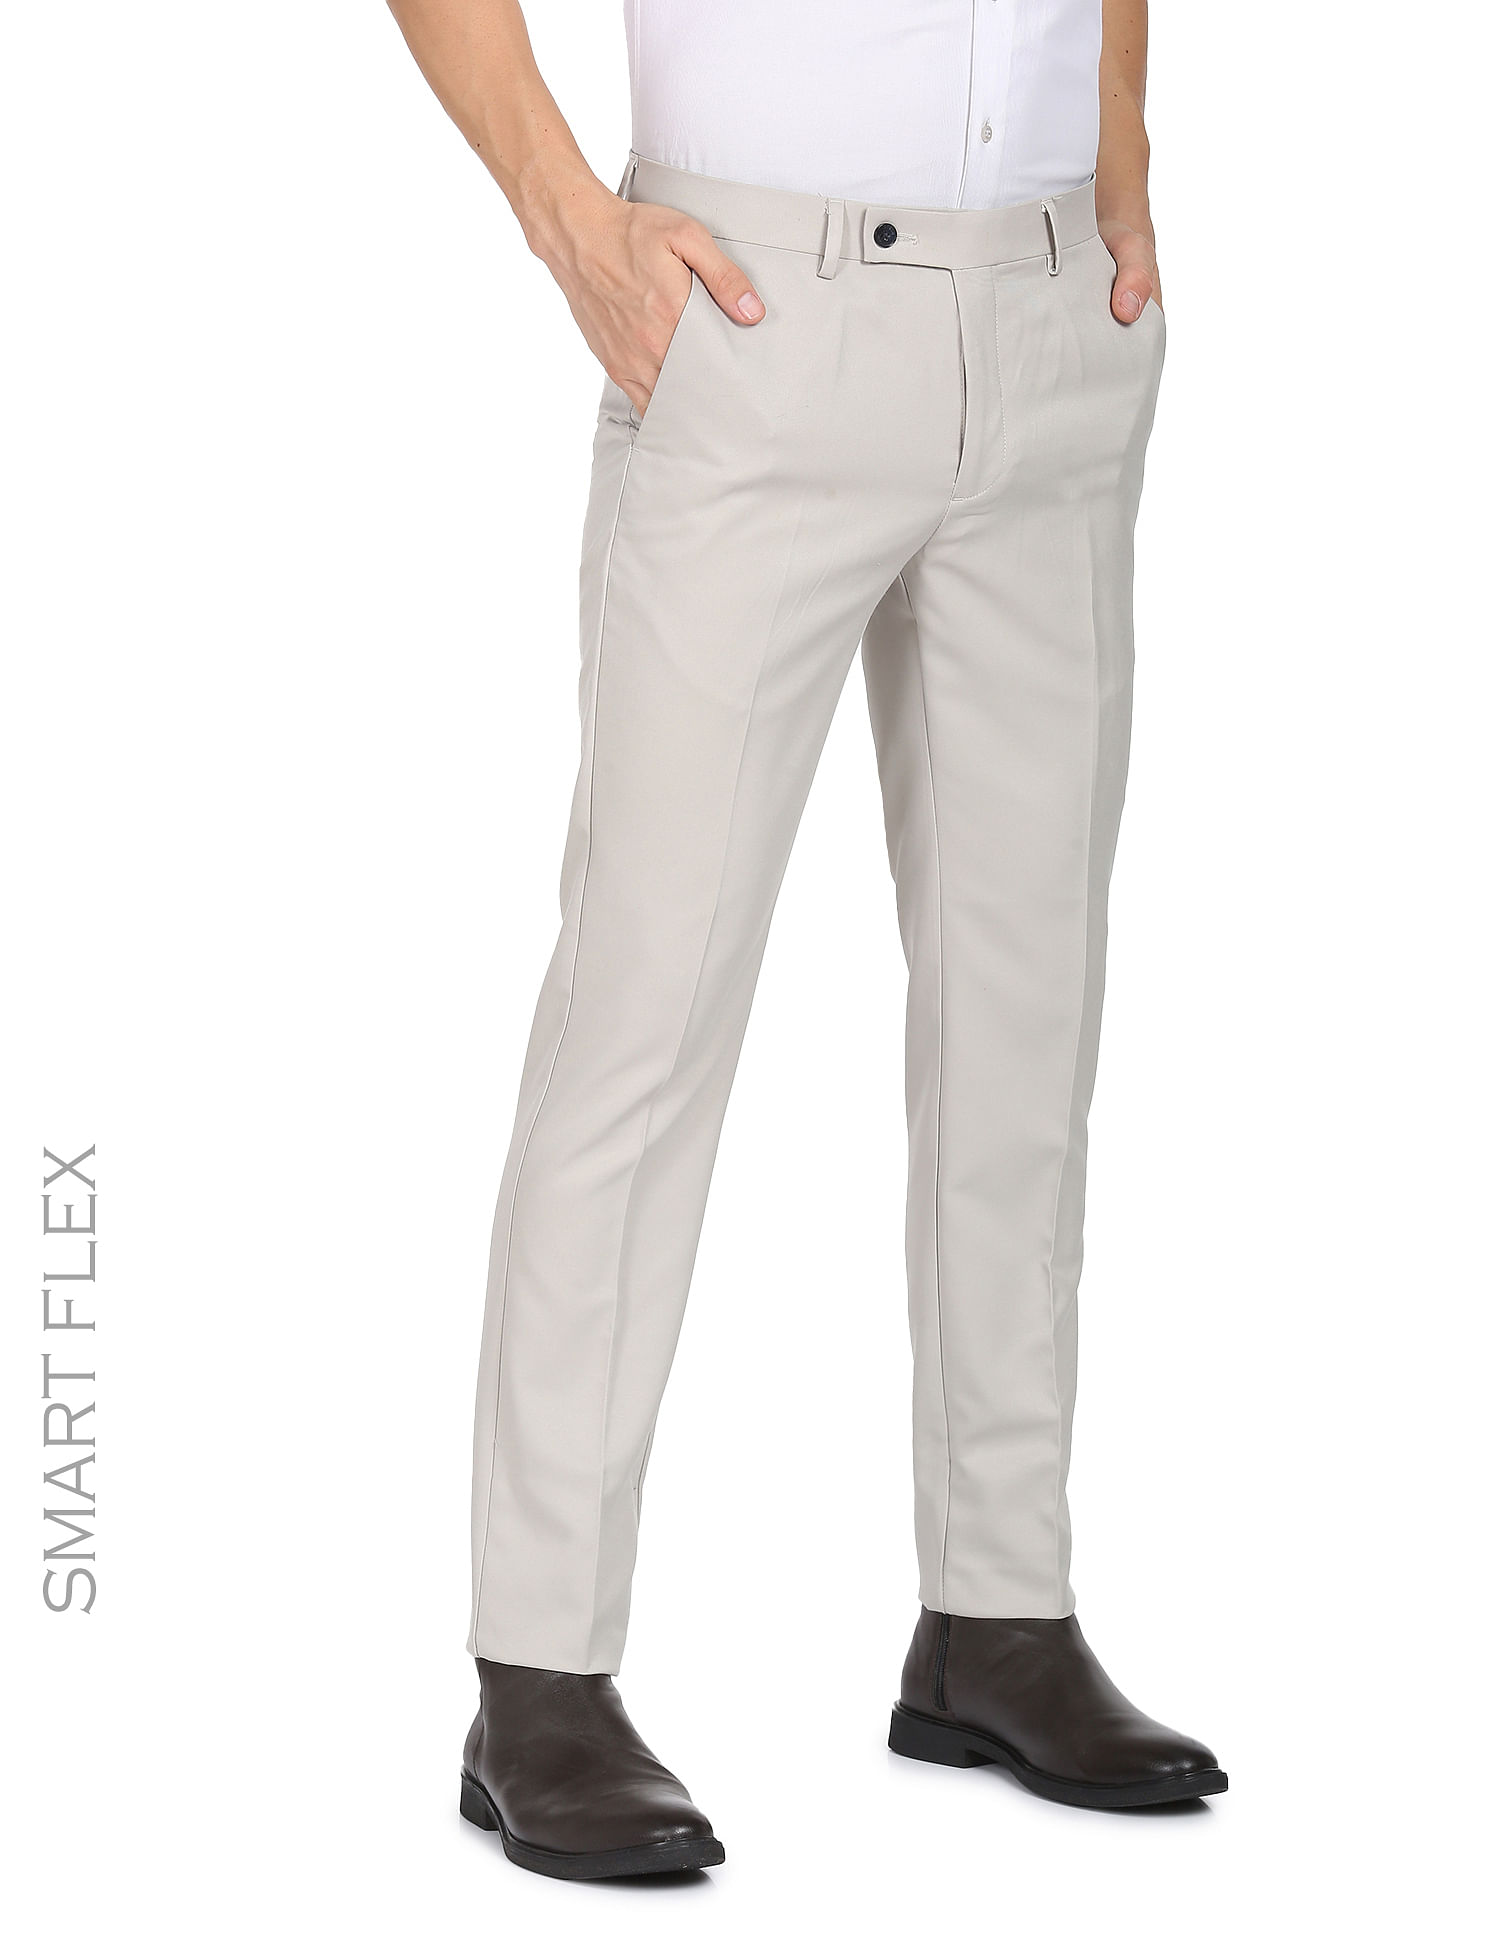 Buy Arrow Men's Skinny Pants (ASAFTR2498_Khaki at Amazon.in